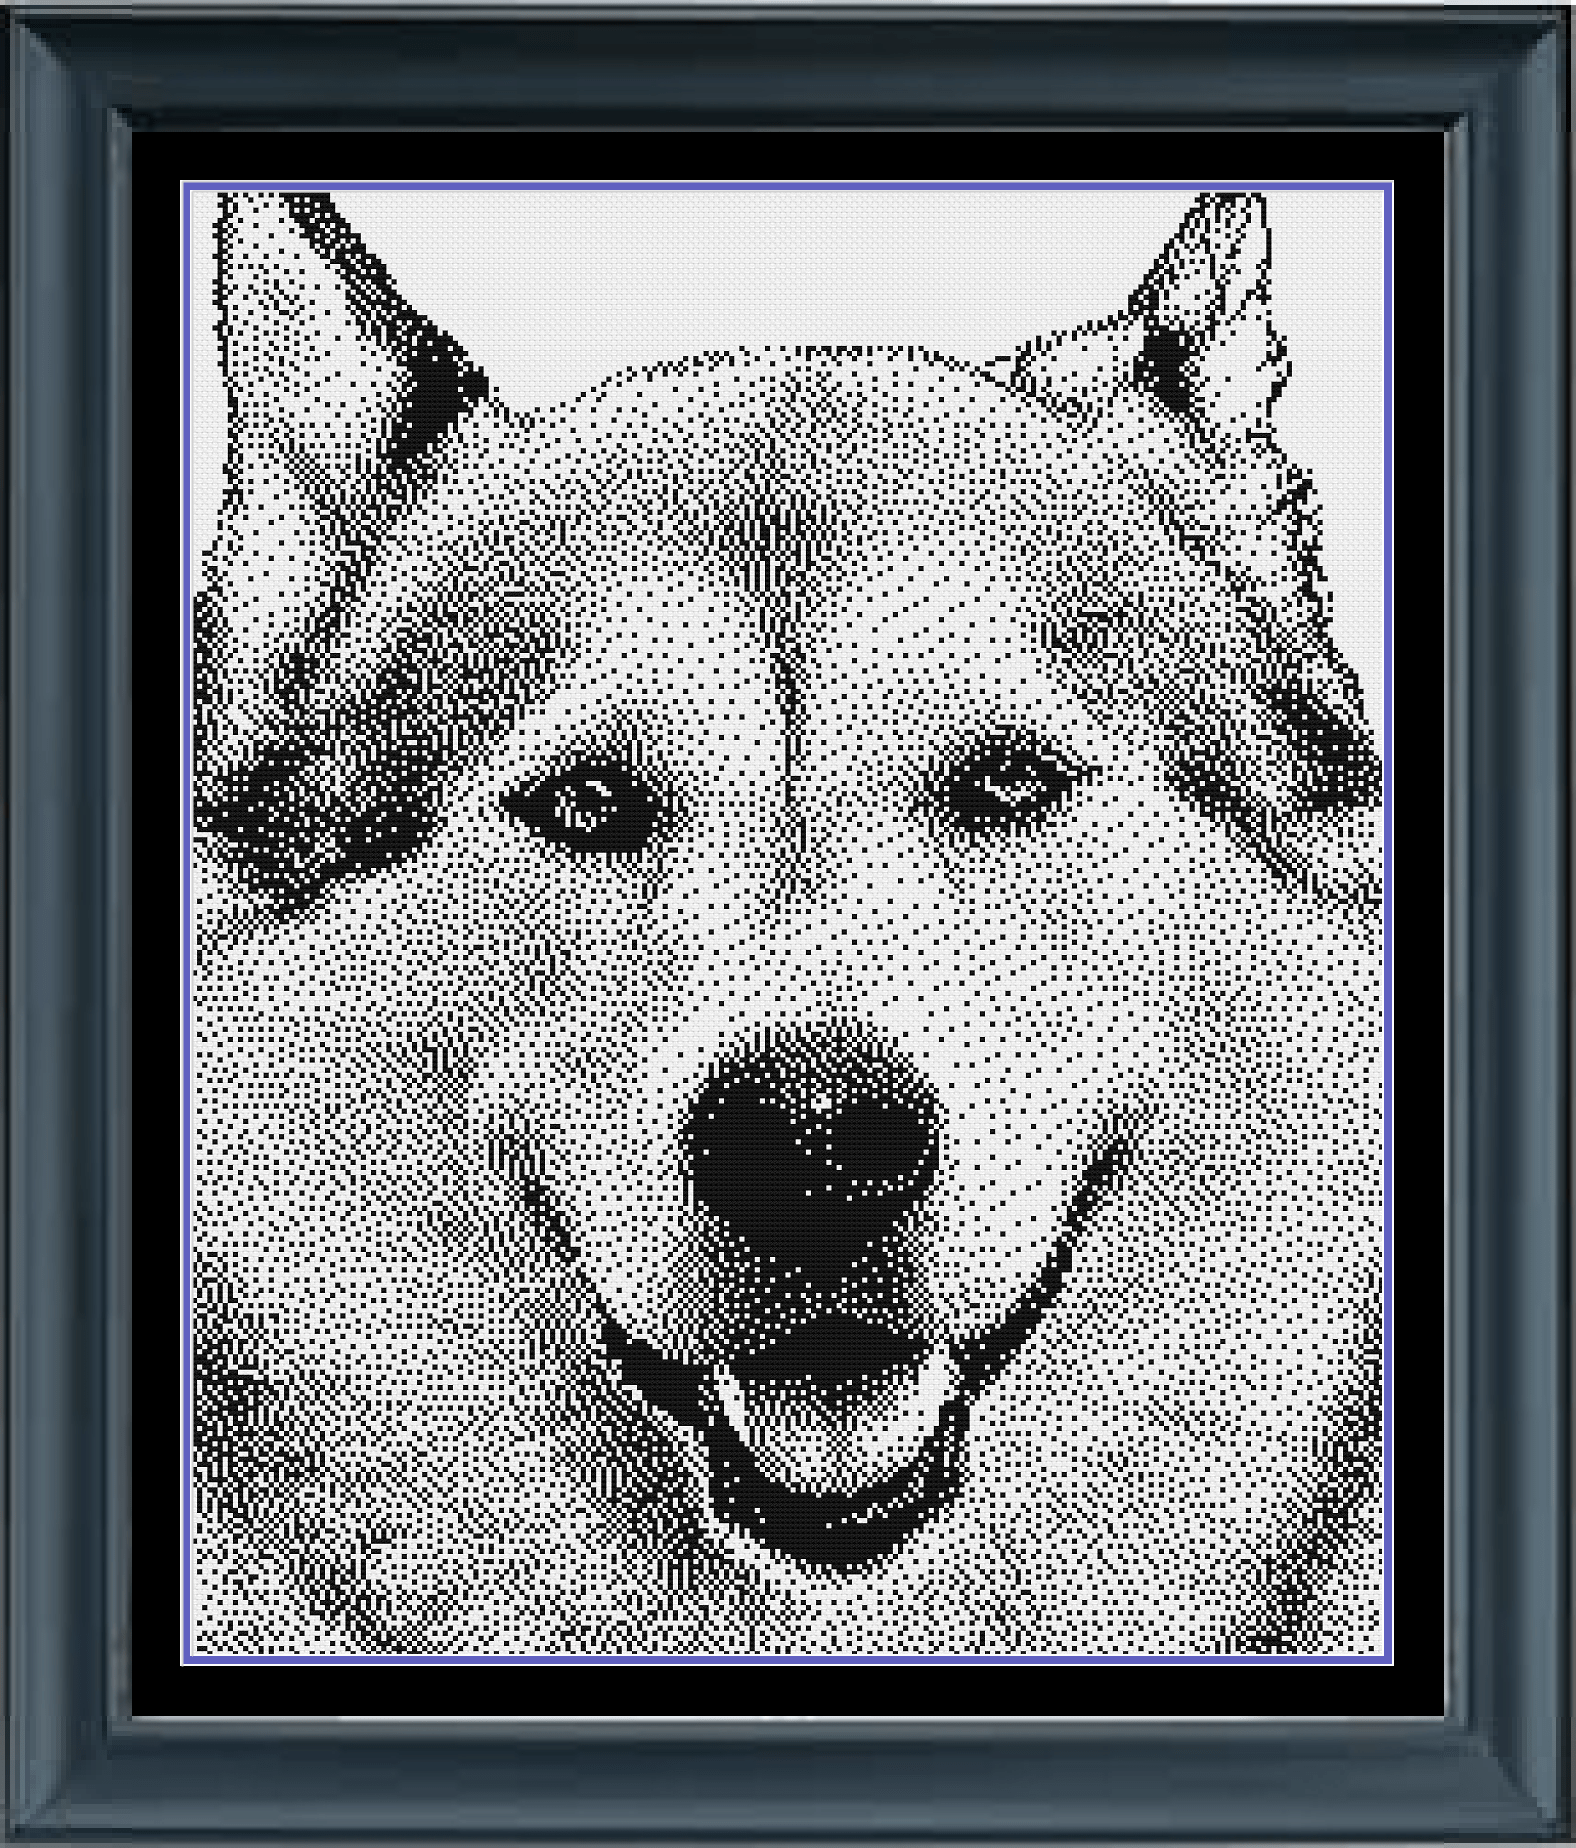 Stitching Jules Design Cross Stitch Pattern Siberian Husky Cross Stitch Pattern | Dog Cross Stitch Pattern | Blackwork | Instant PDF Download